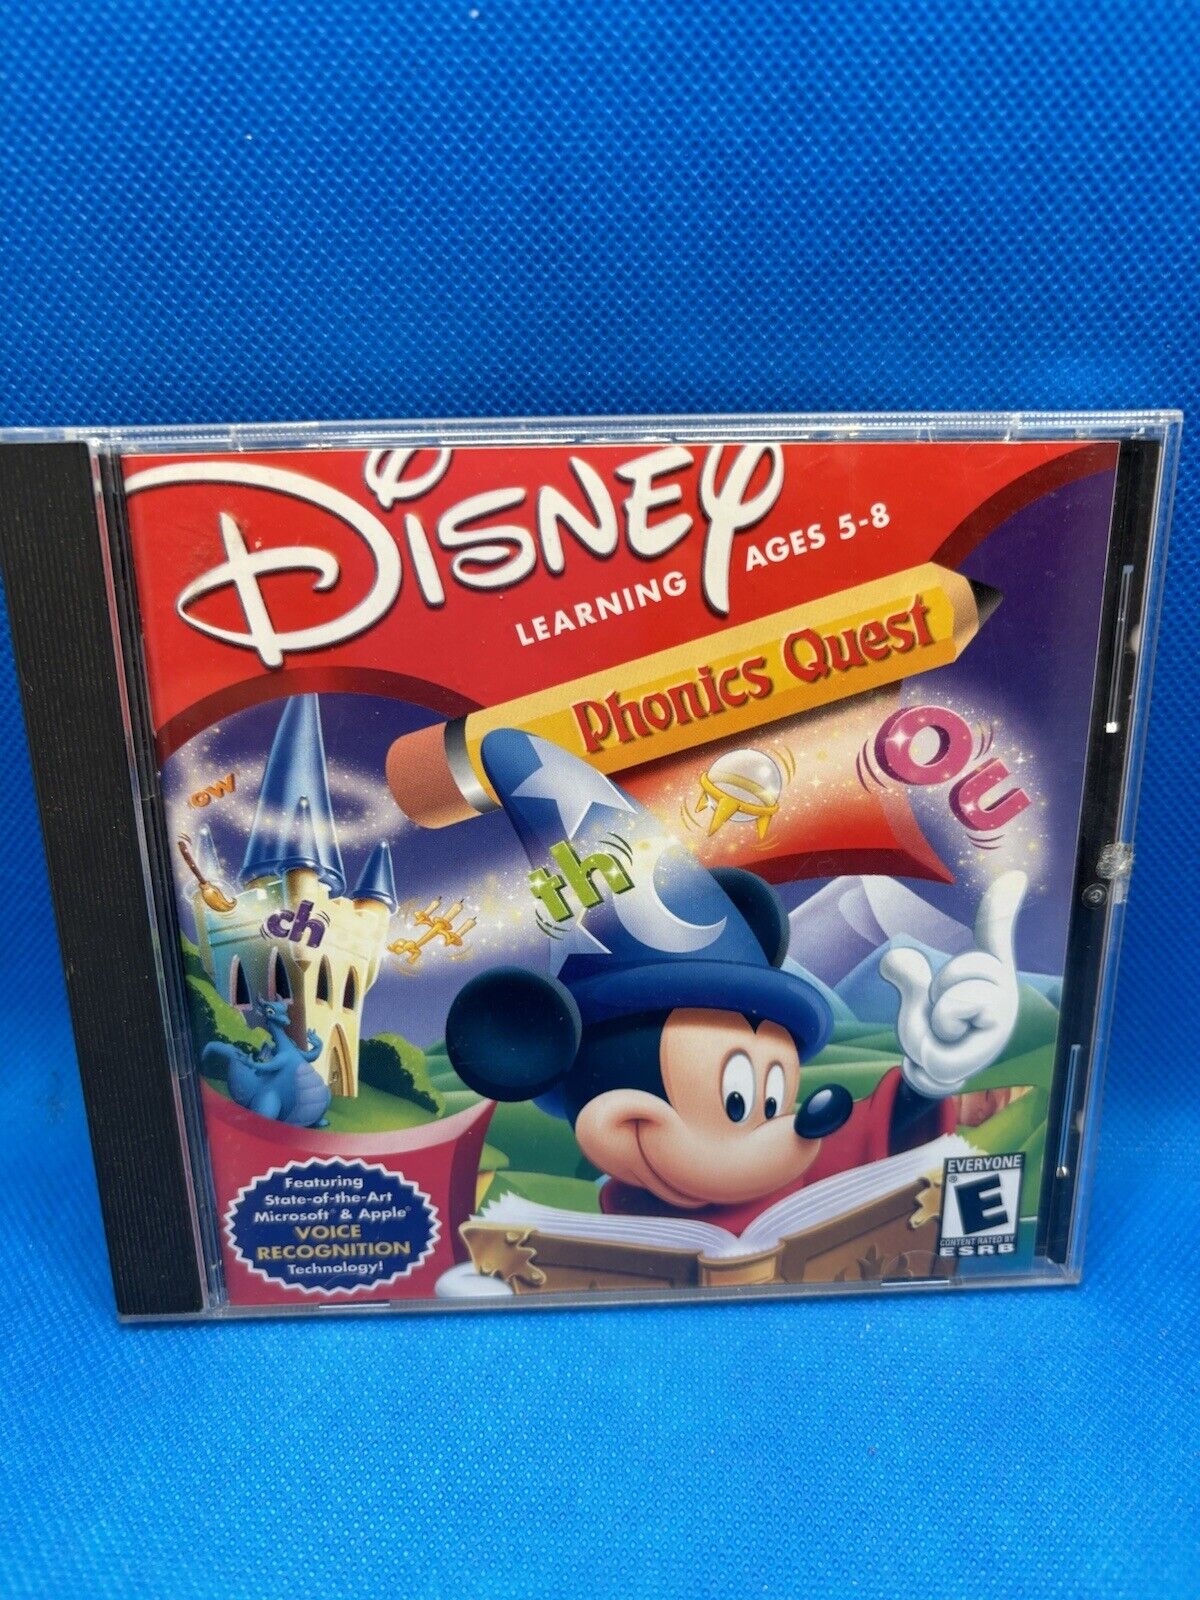 Disney Scholastic Phonics Quest Age 5-8 Windows  Mac Interactive Learning CD